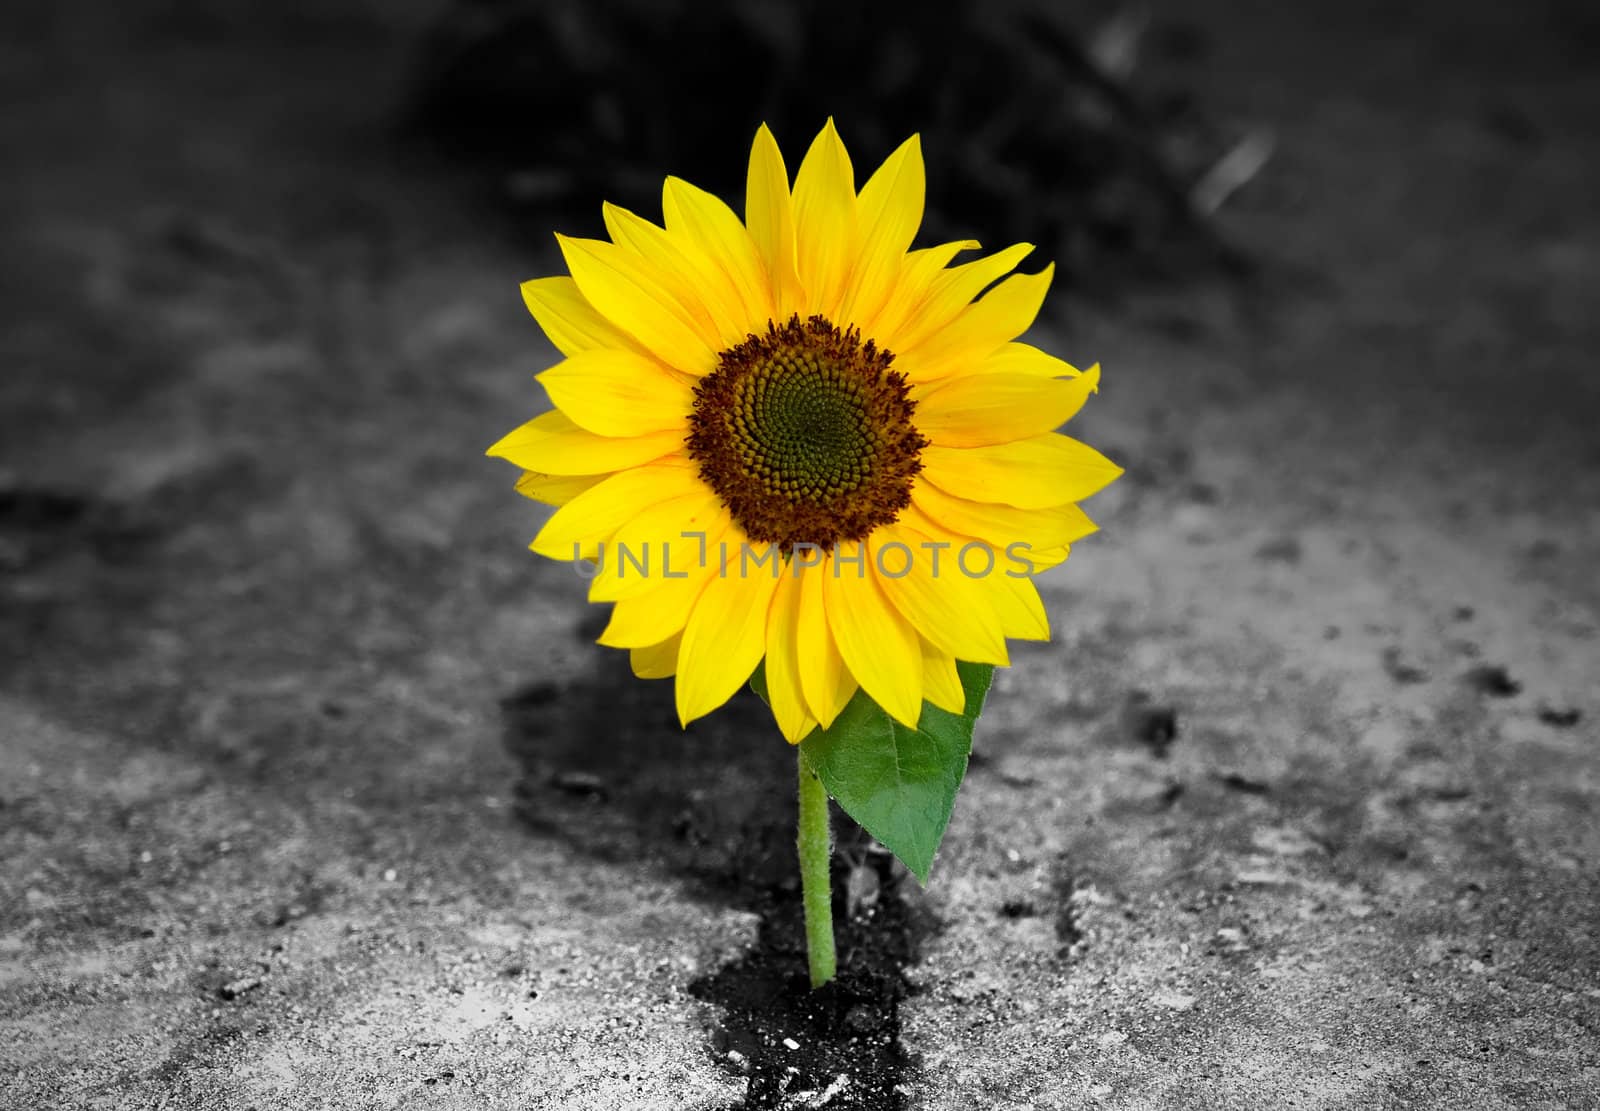 Sunflower on monochrome background by Bedolaga